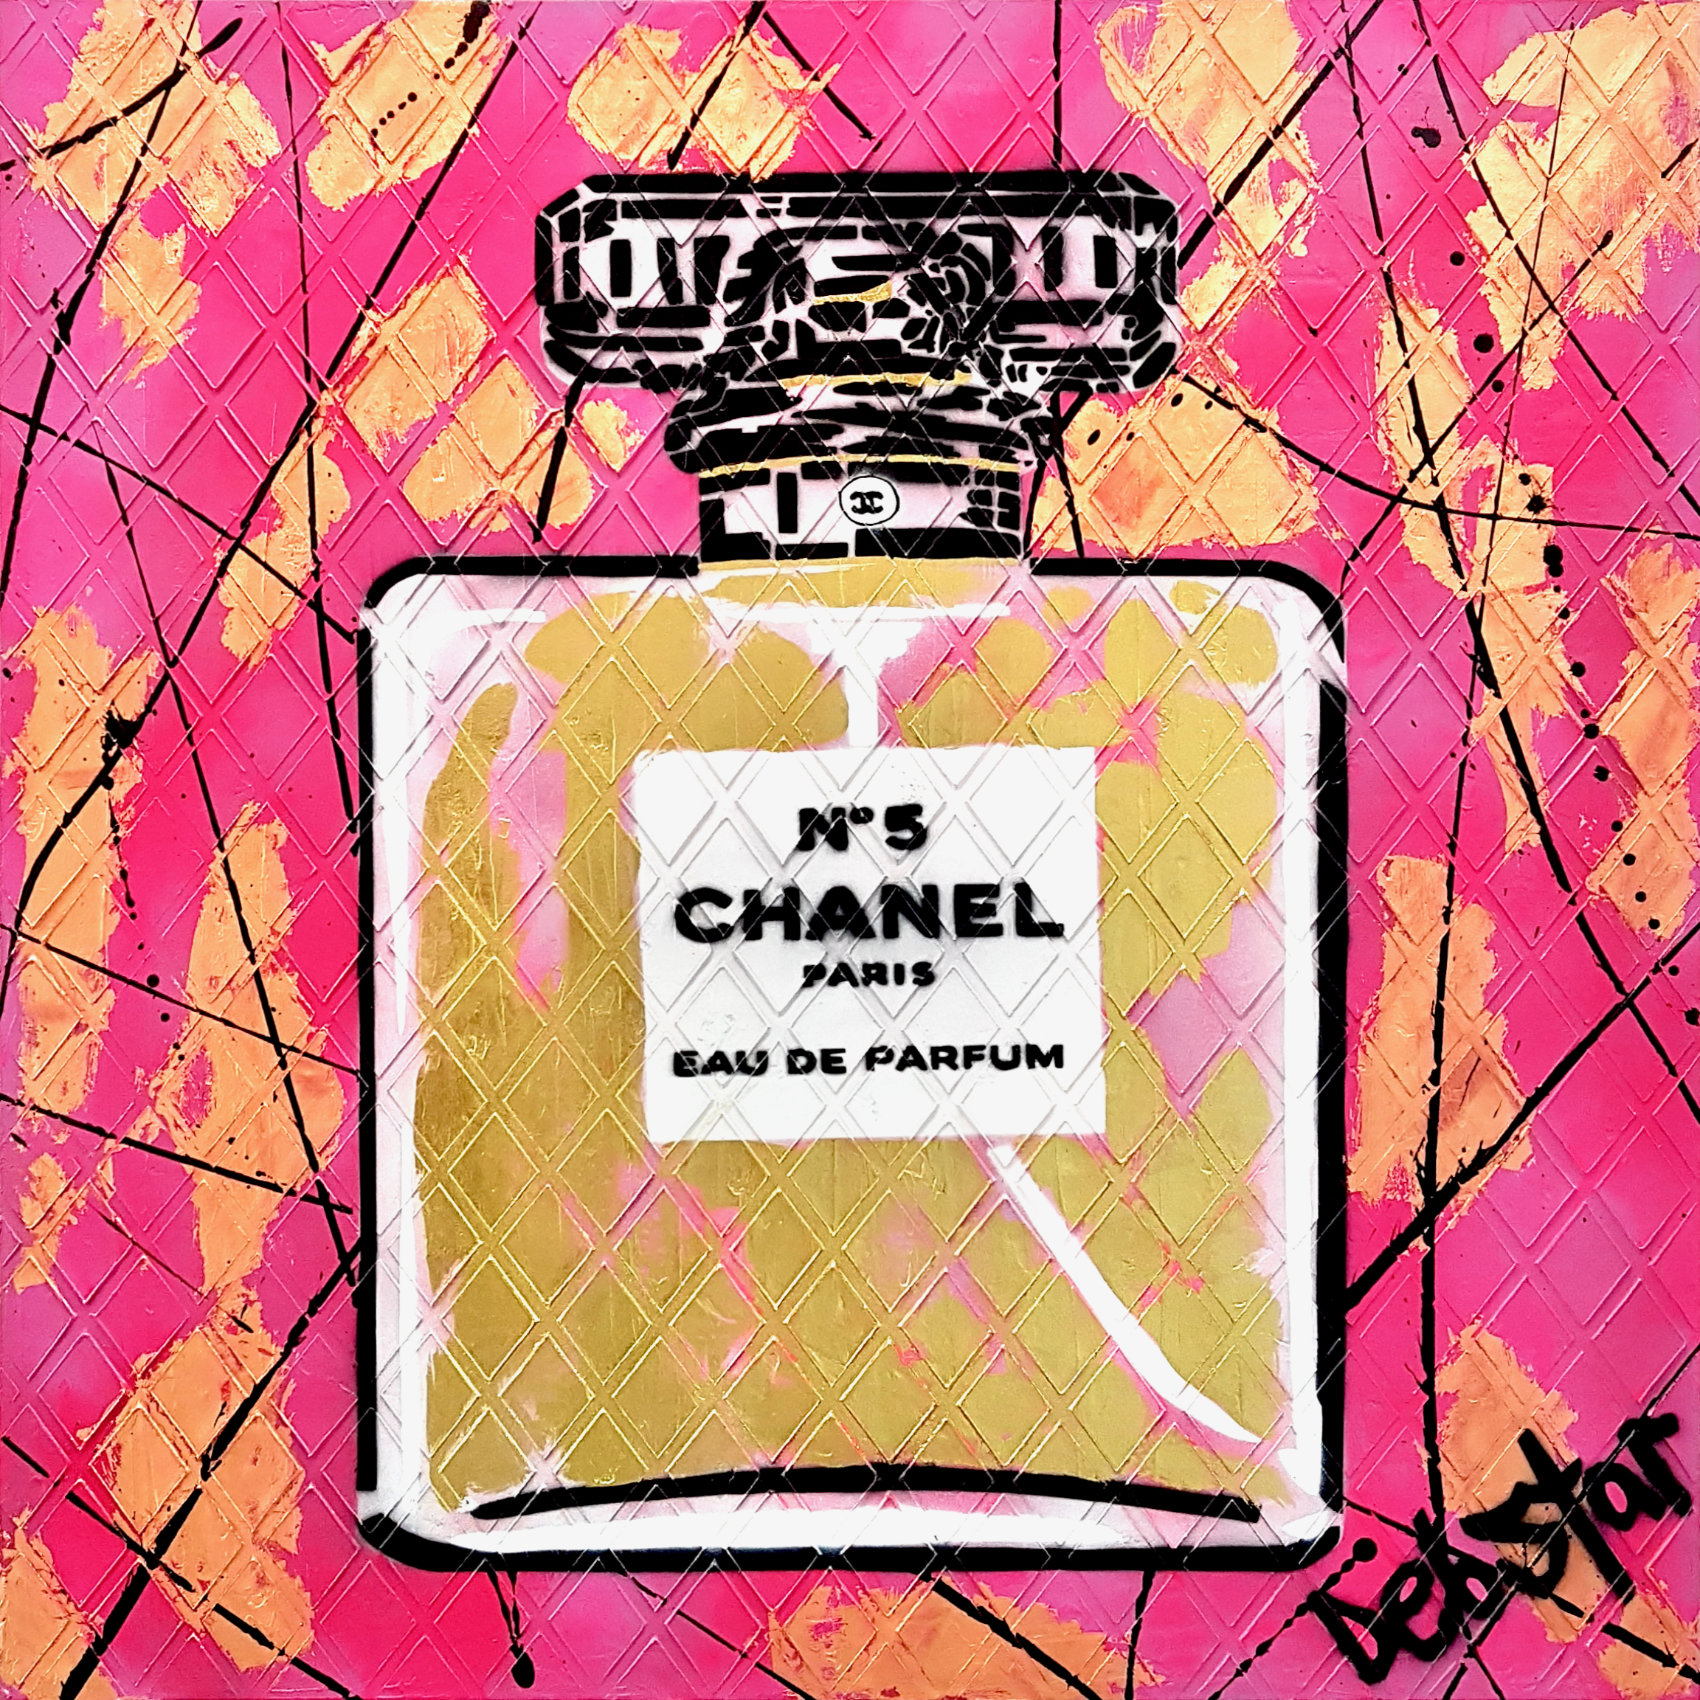 Chanel Coco Noir Perfume' Urban Pop Art Painting by DEBORAH LANG